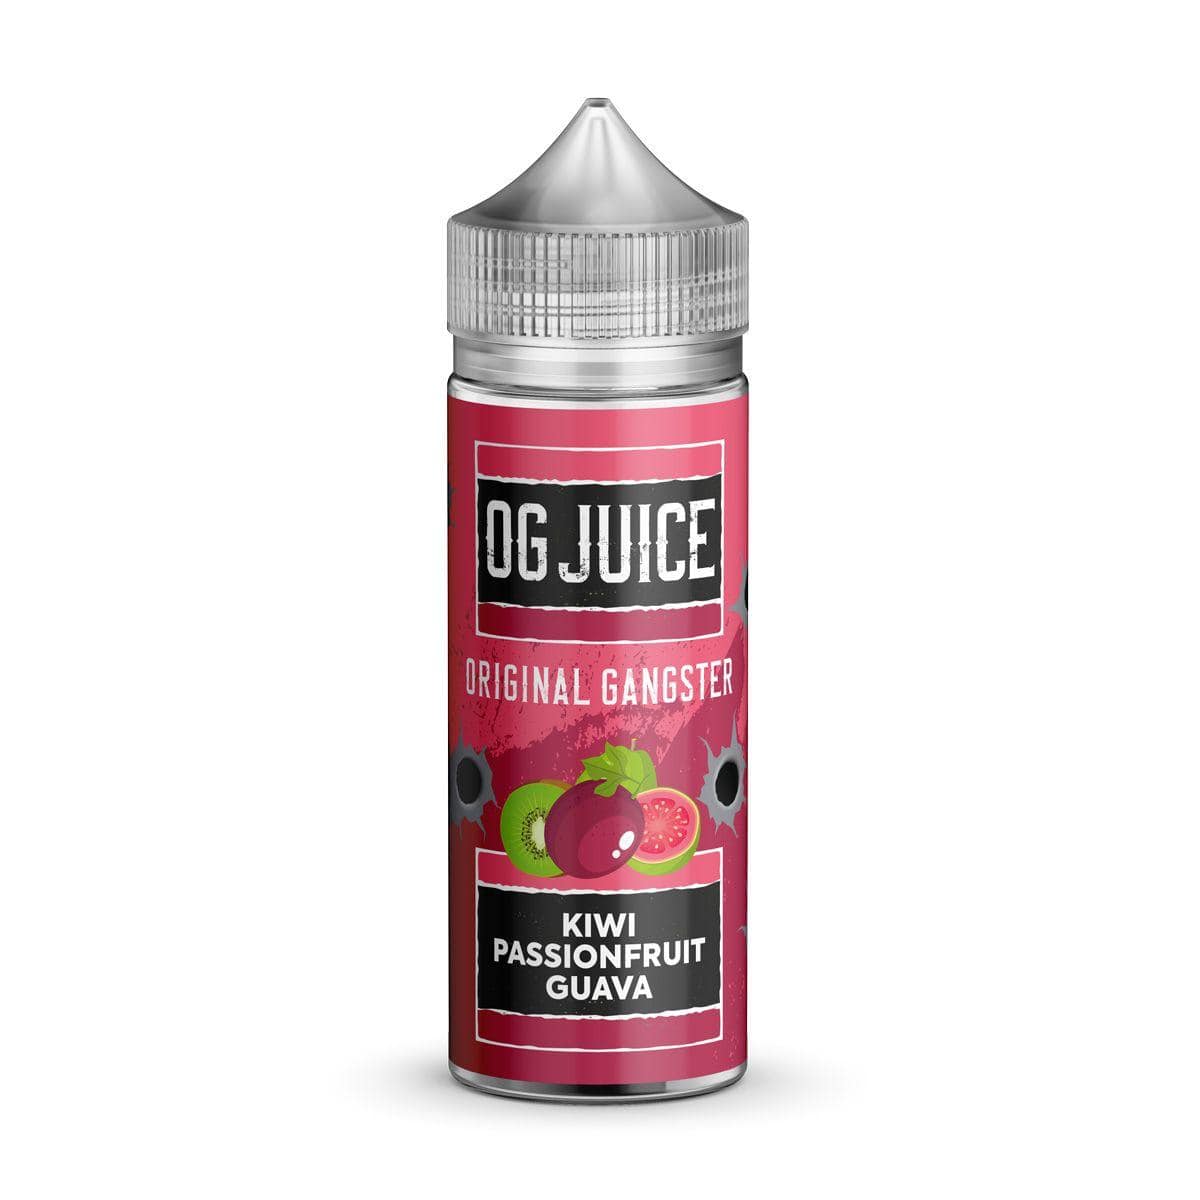 OG Juice Original Gangster - Kiwi Passion Fruit Guava - 100ml E-liquid Shortfill - Mcr Vape Distro